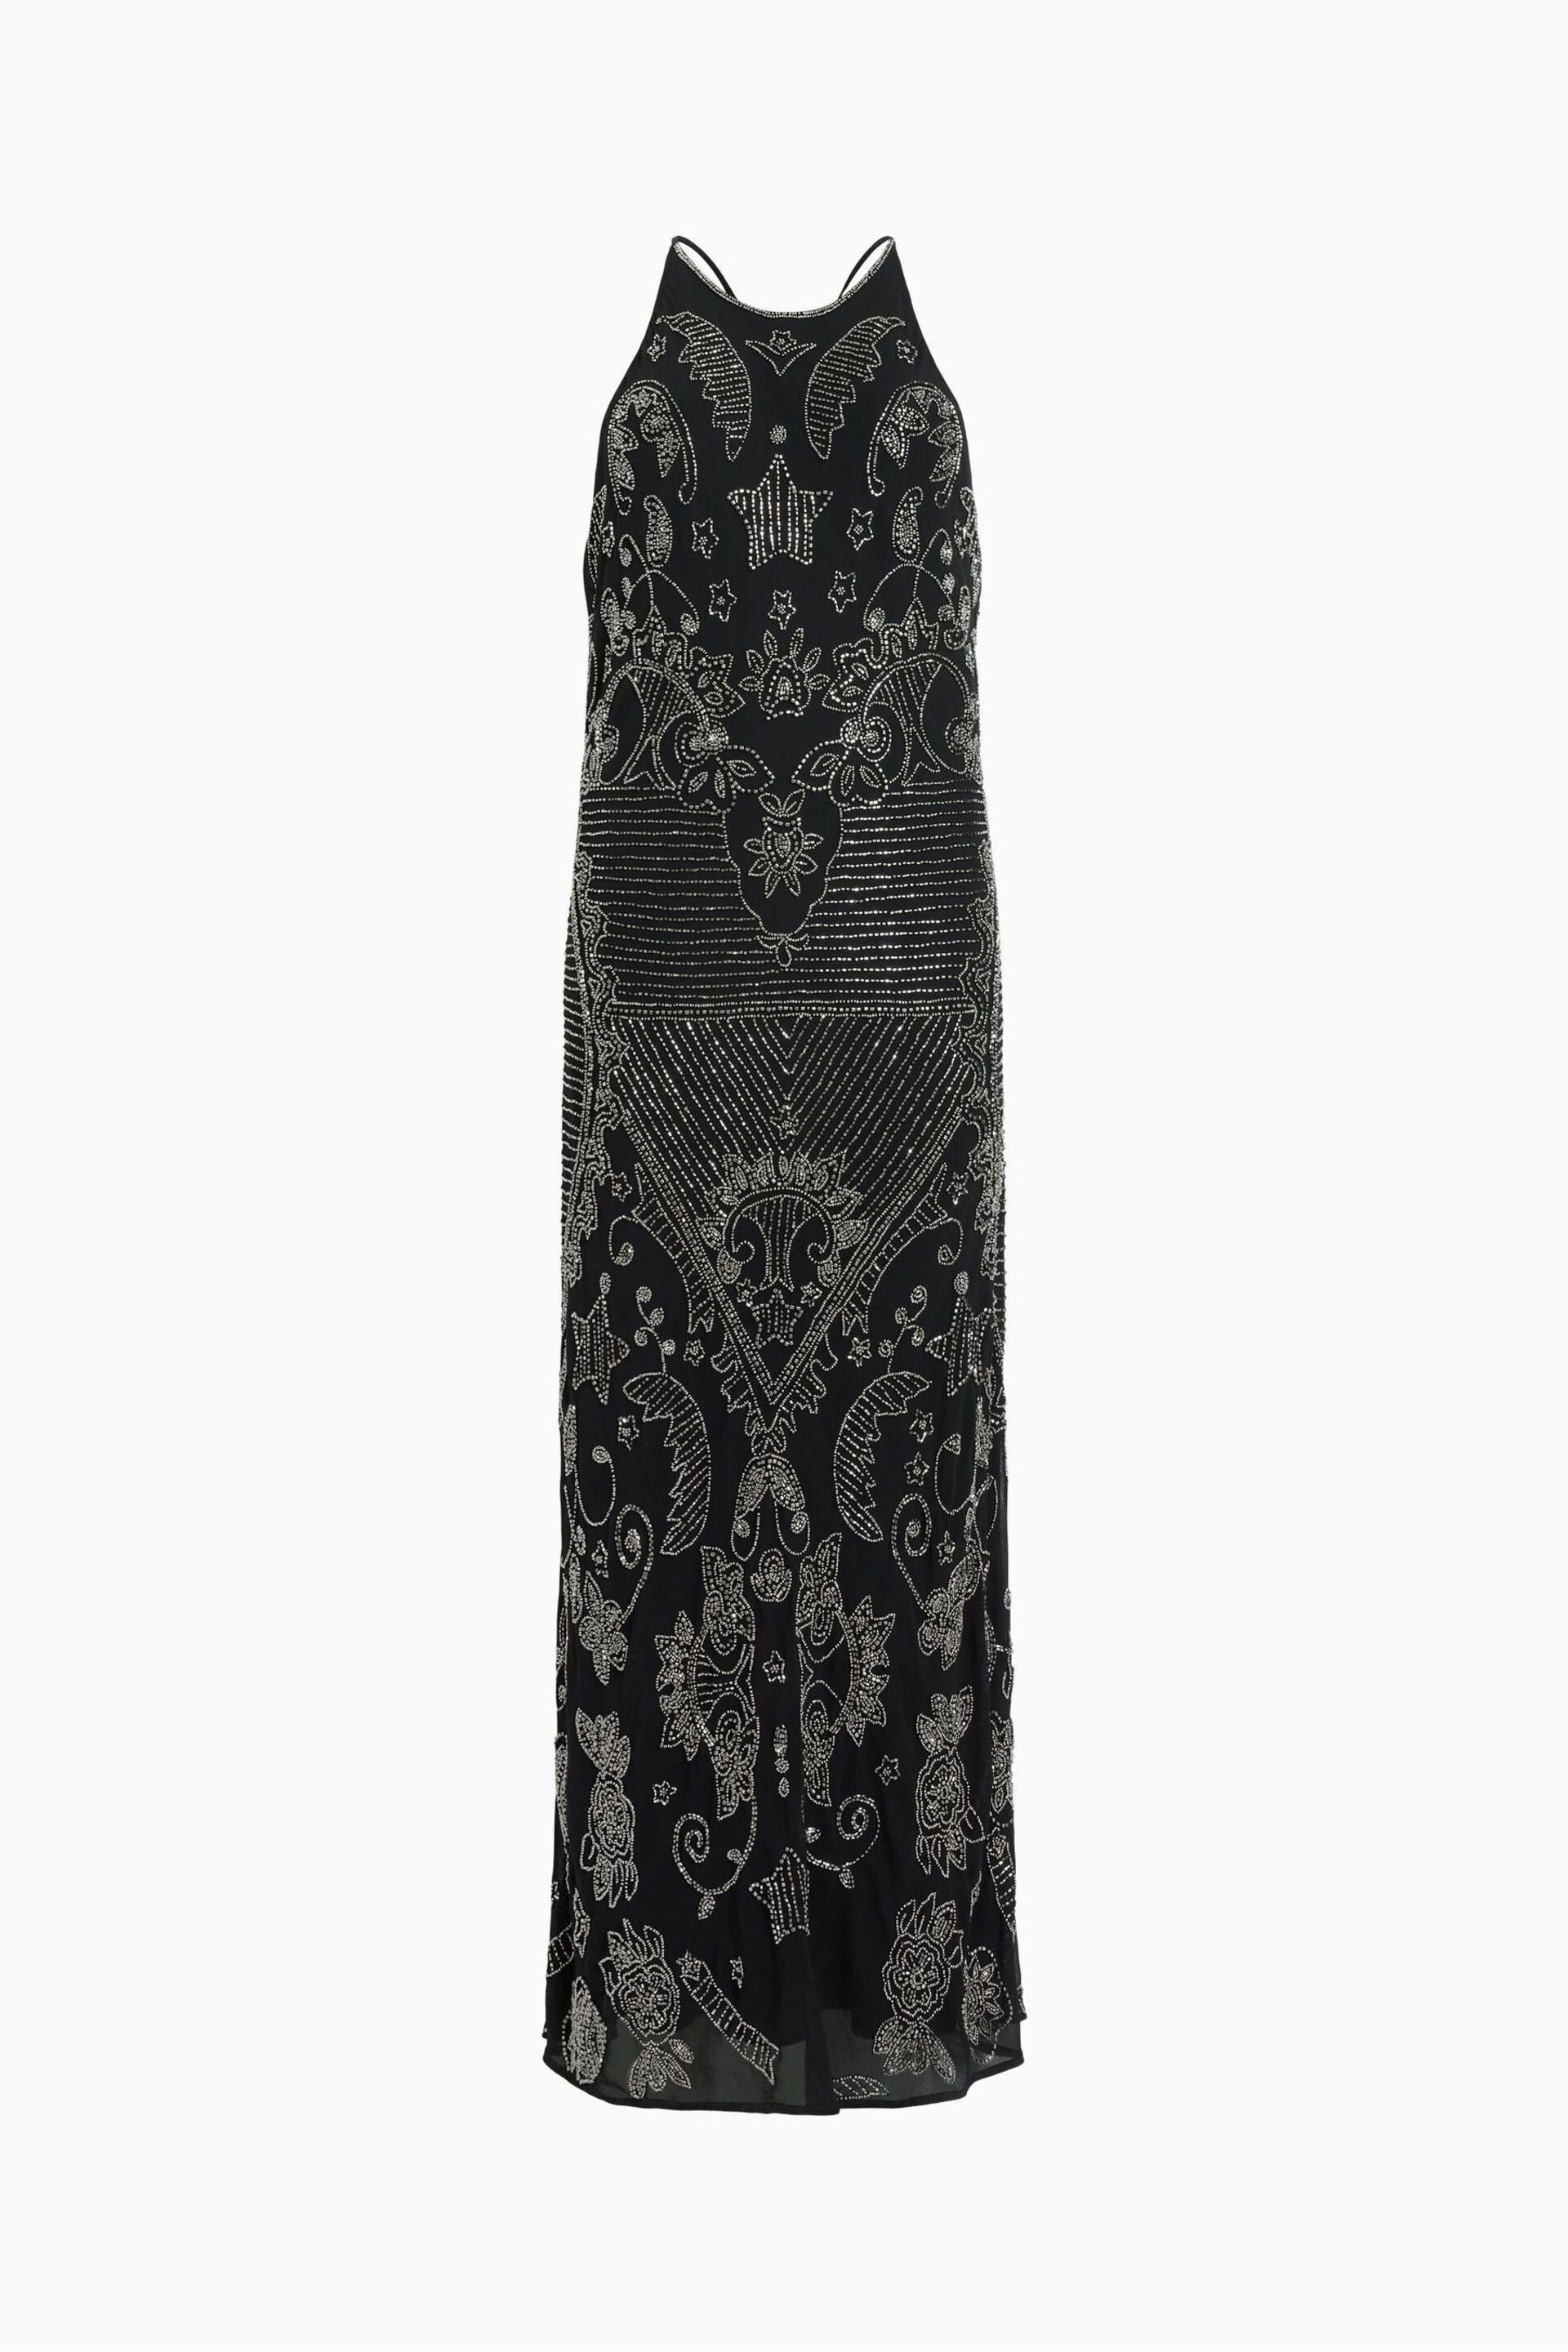 AllSaints Black Coralie Emb Dress - Image 6 of 7